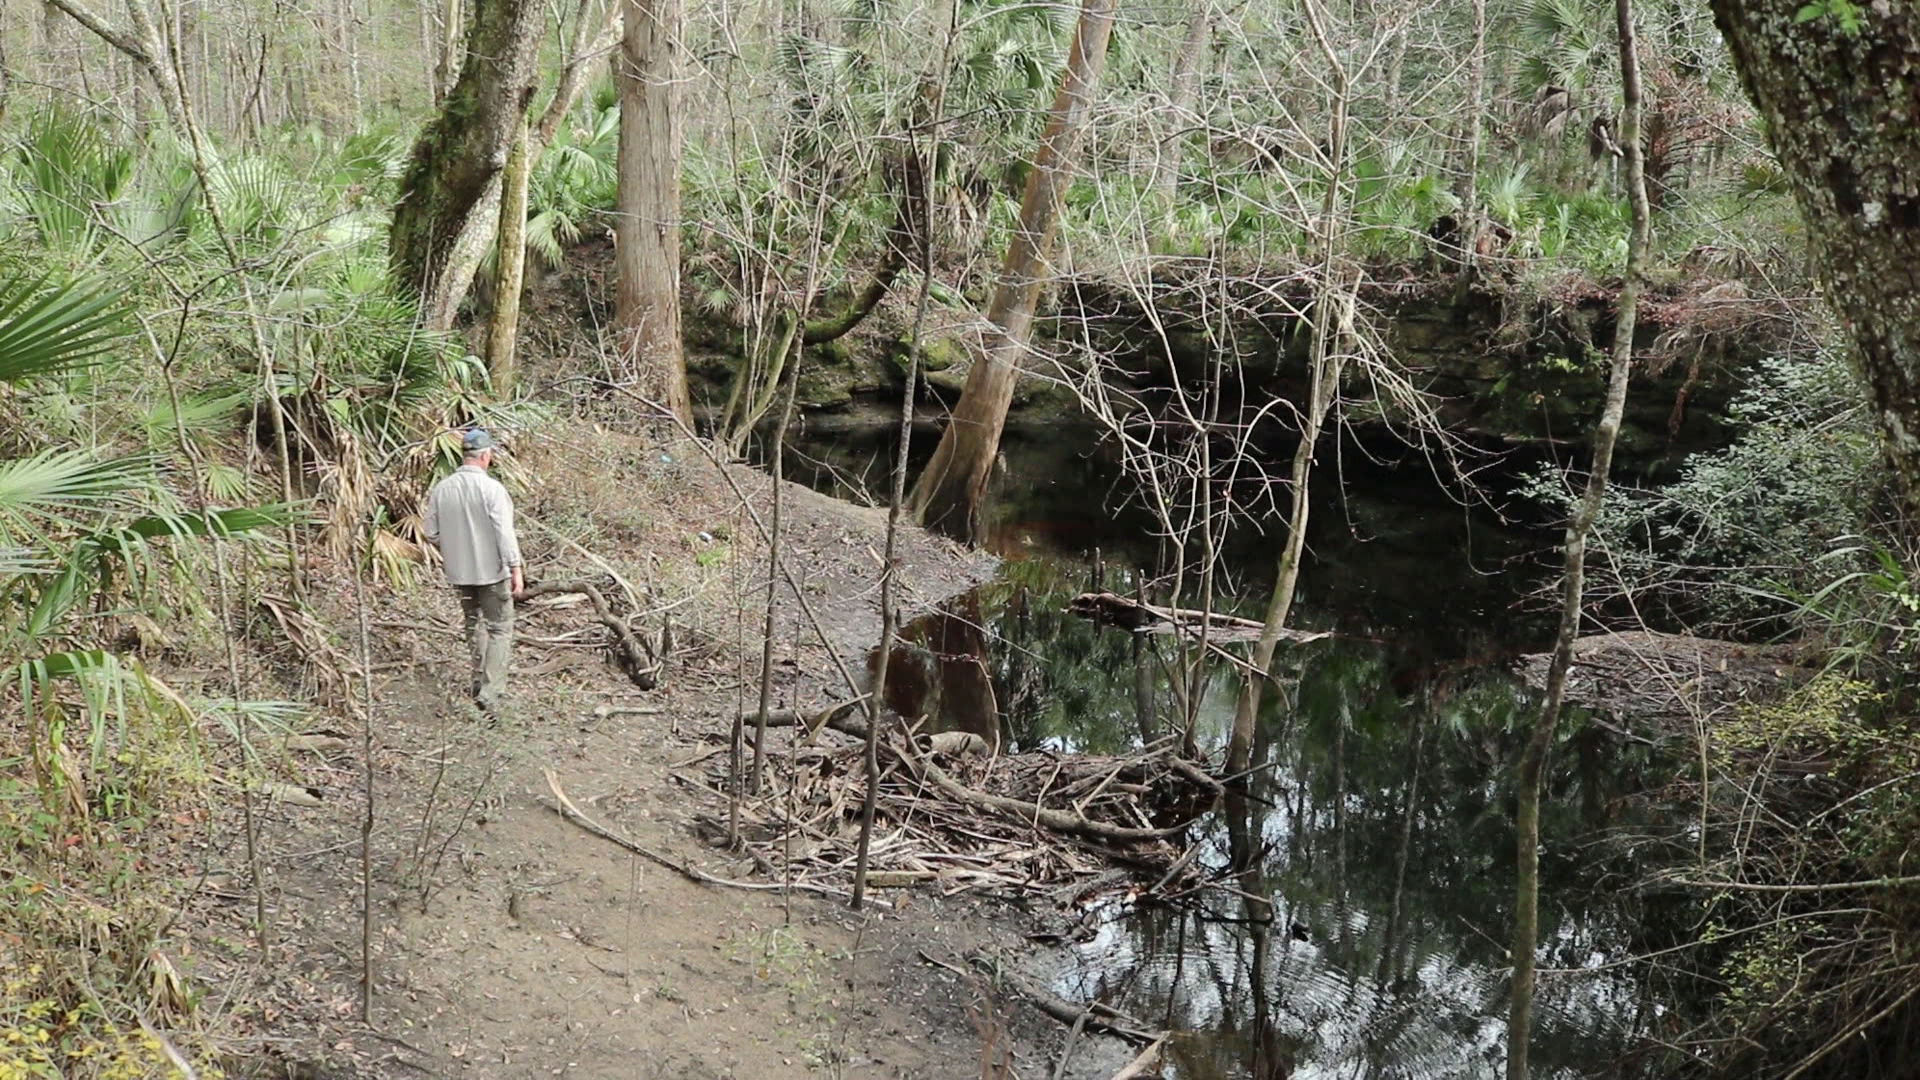 Hiking the Aucilla Sinks | Geology of the Floridan Aquifer